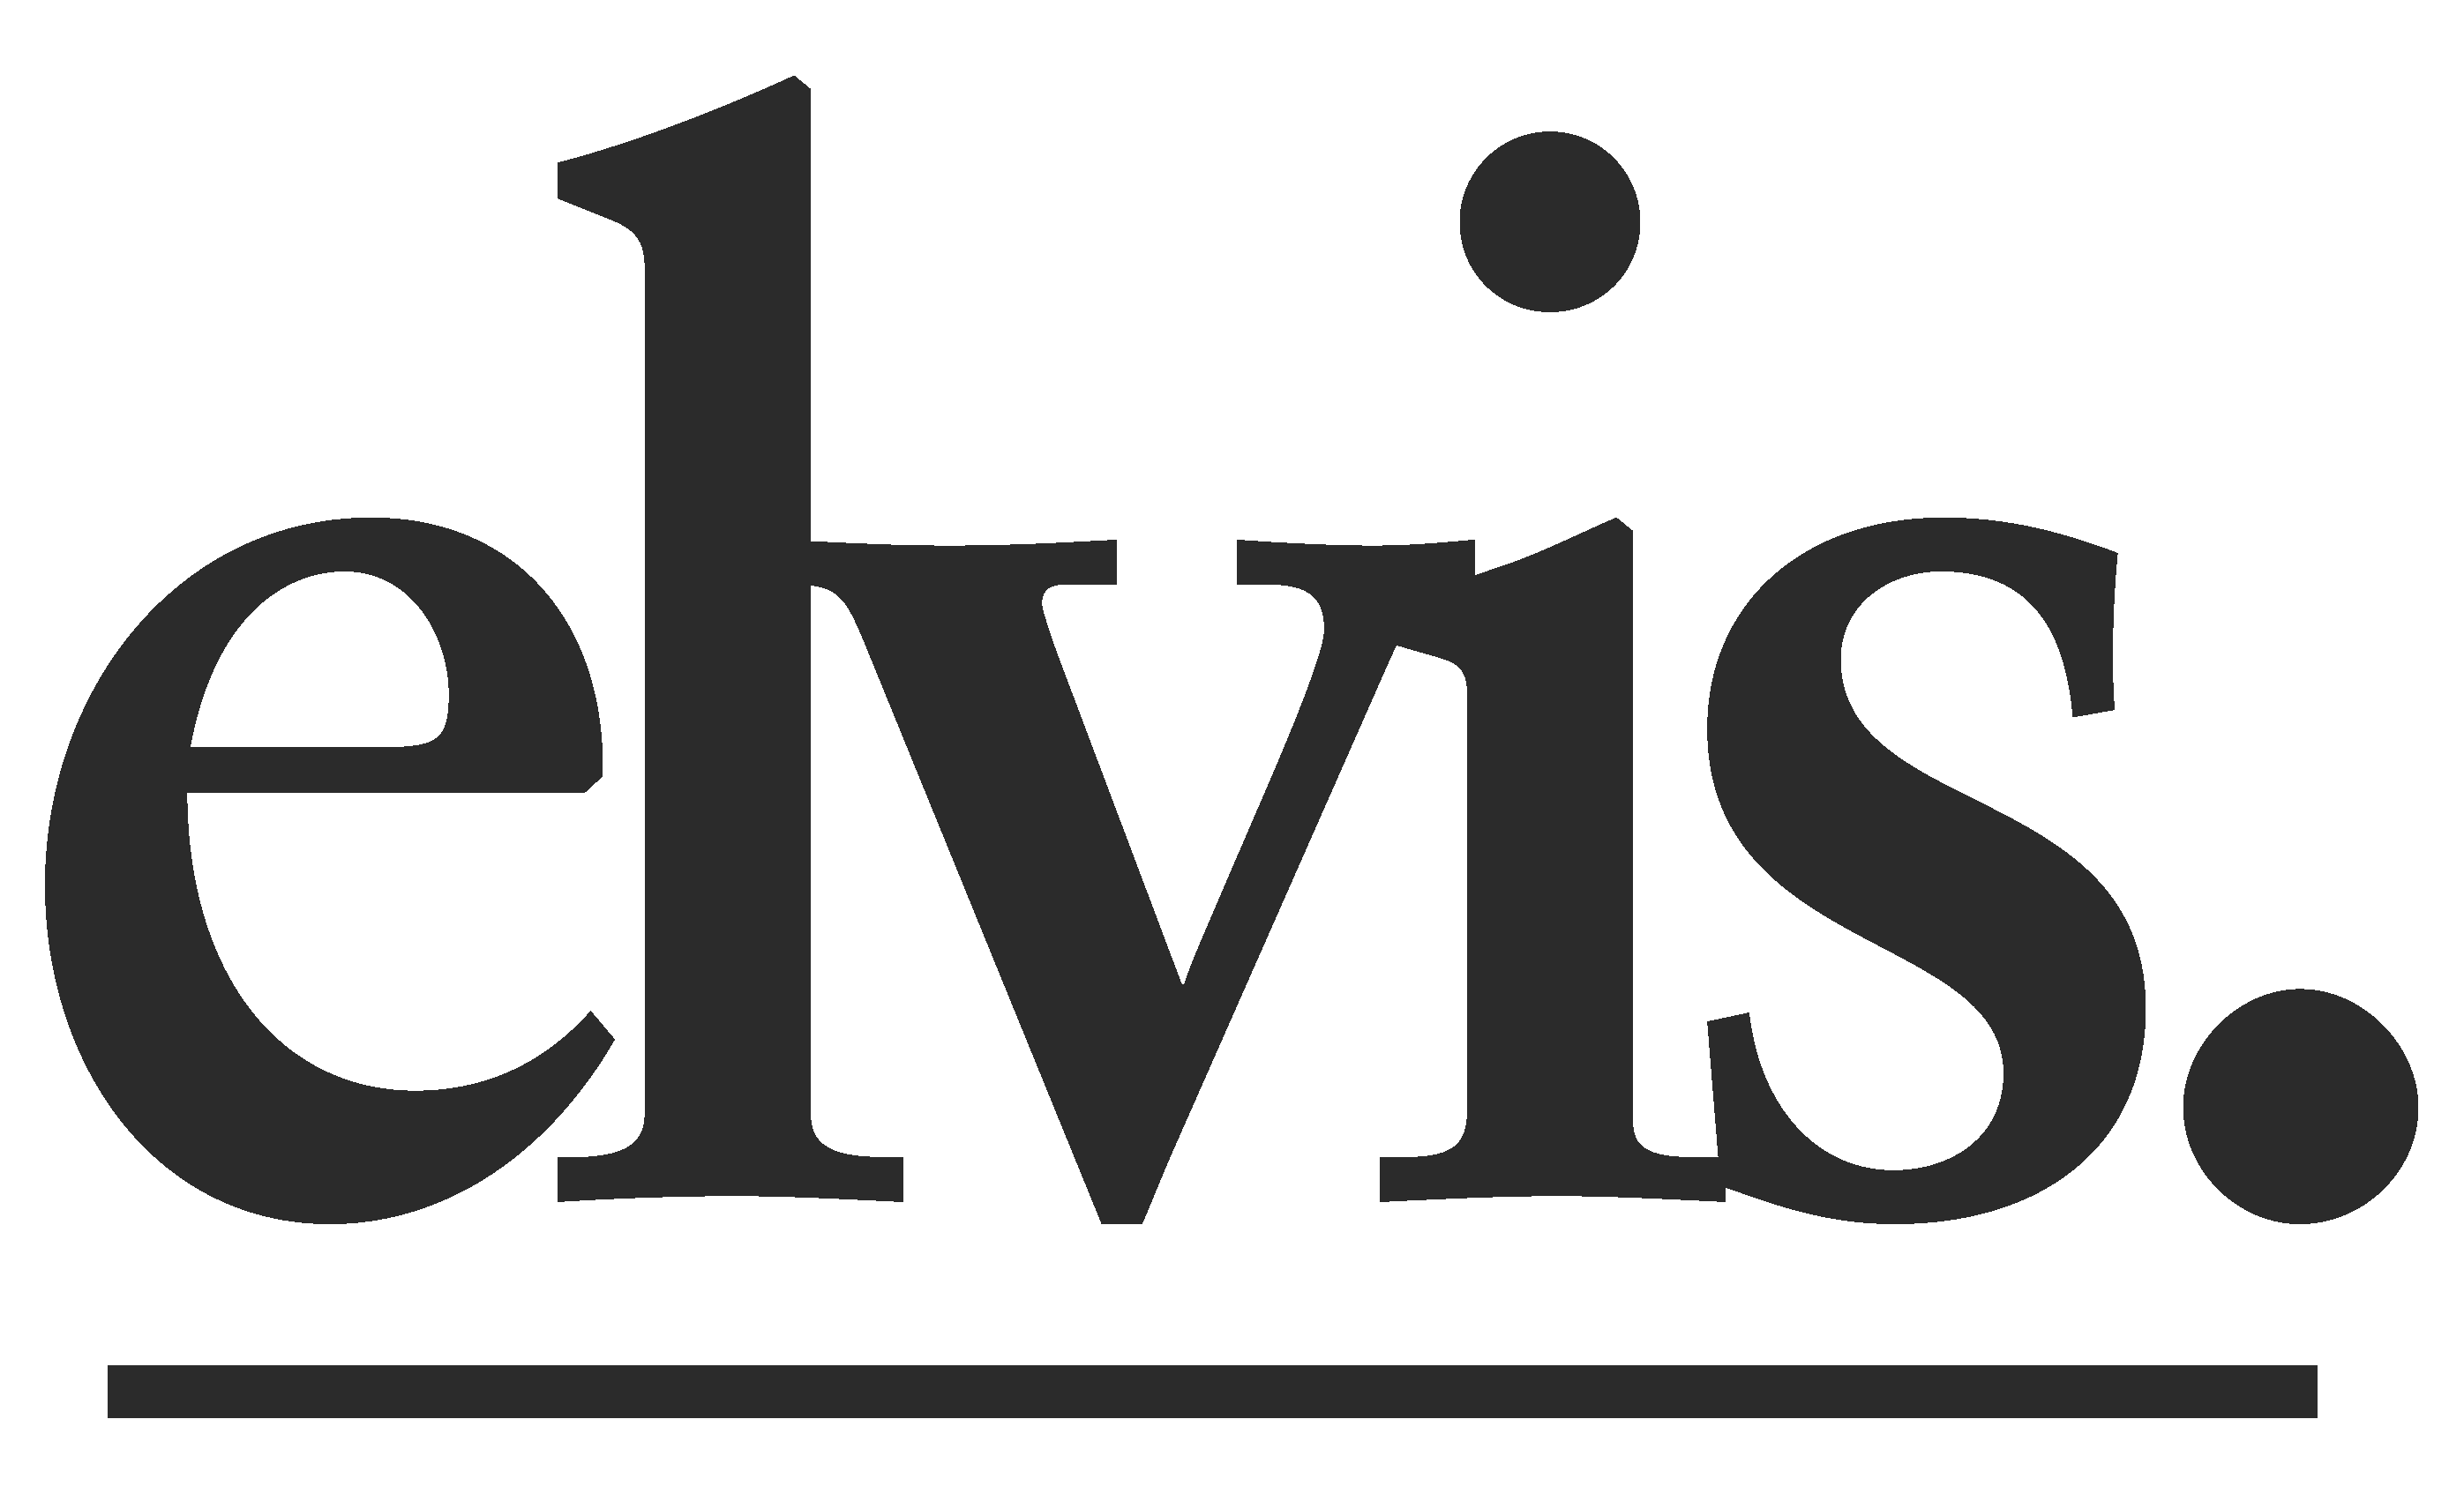 Elvis logo